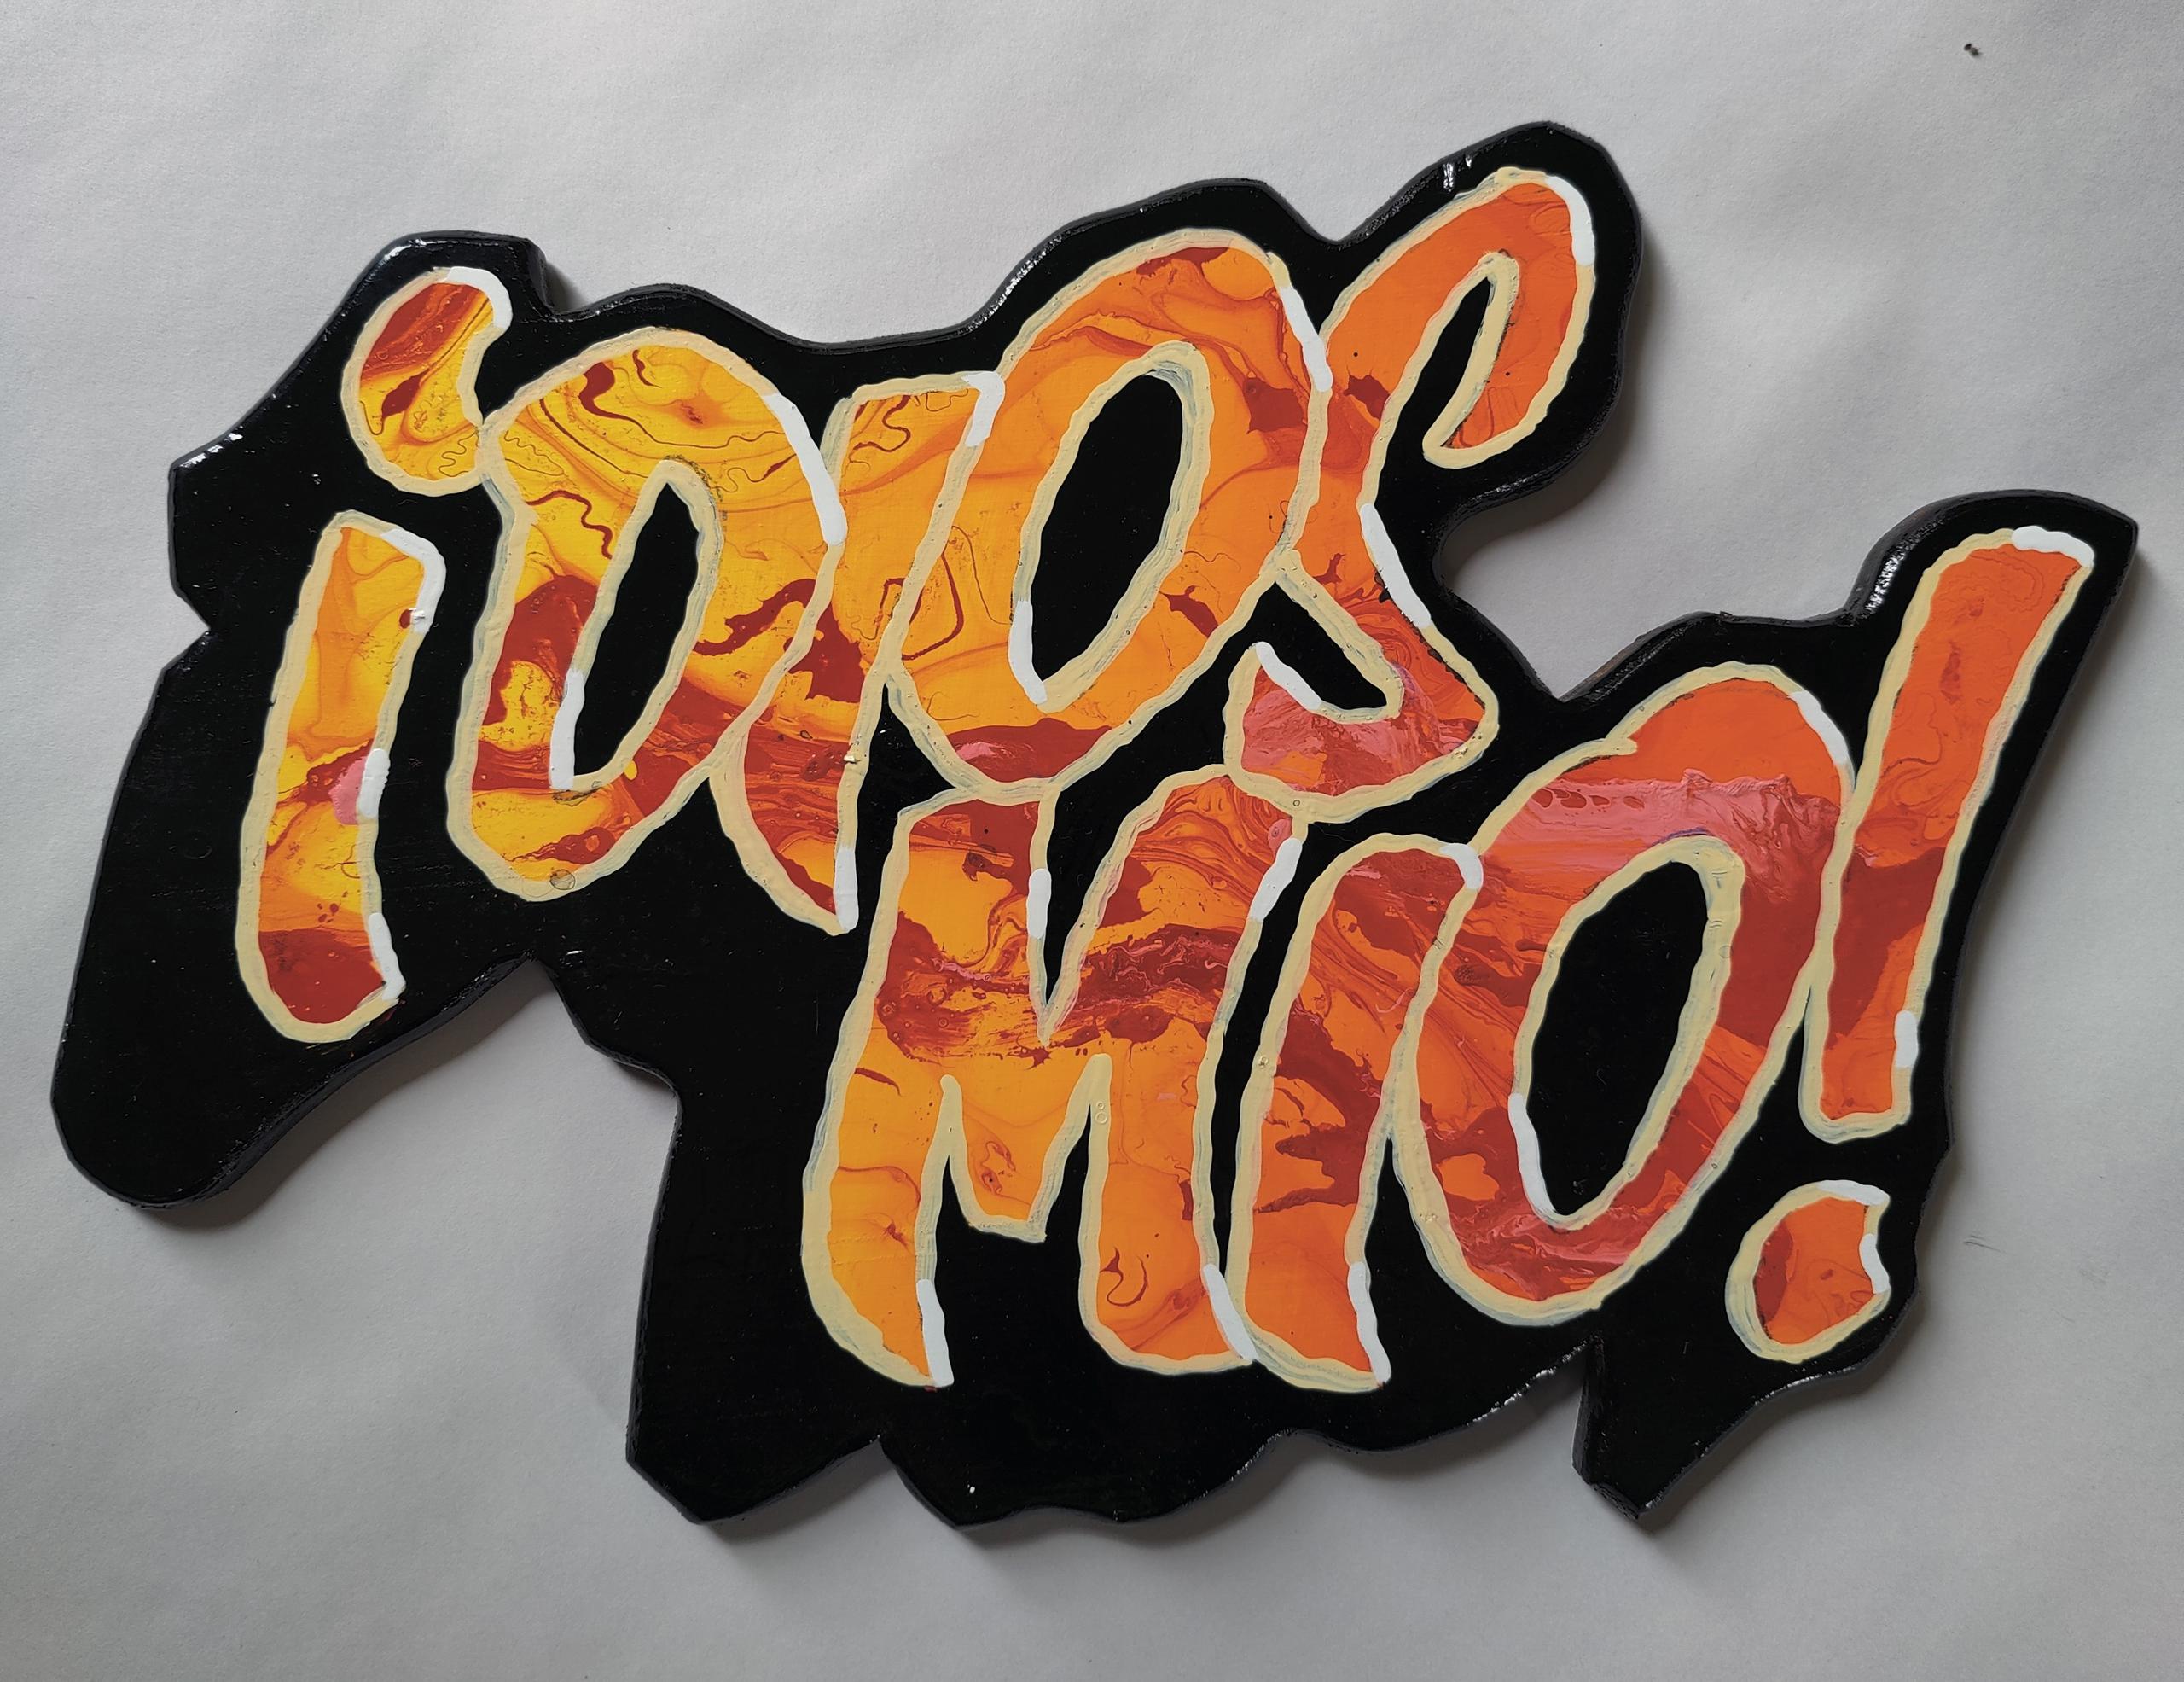 'DIOS MIO!' cutout swirl-dipped panel